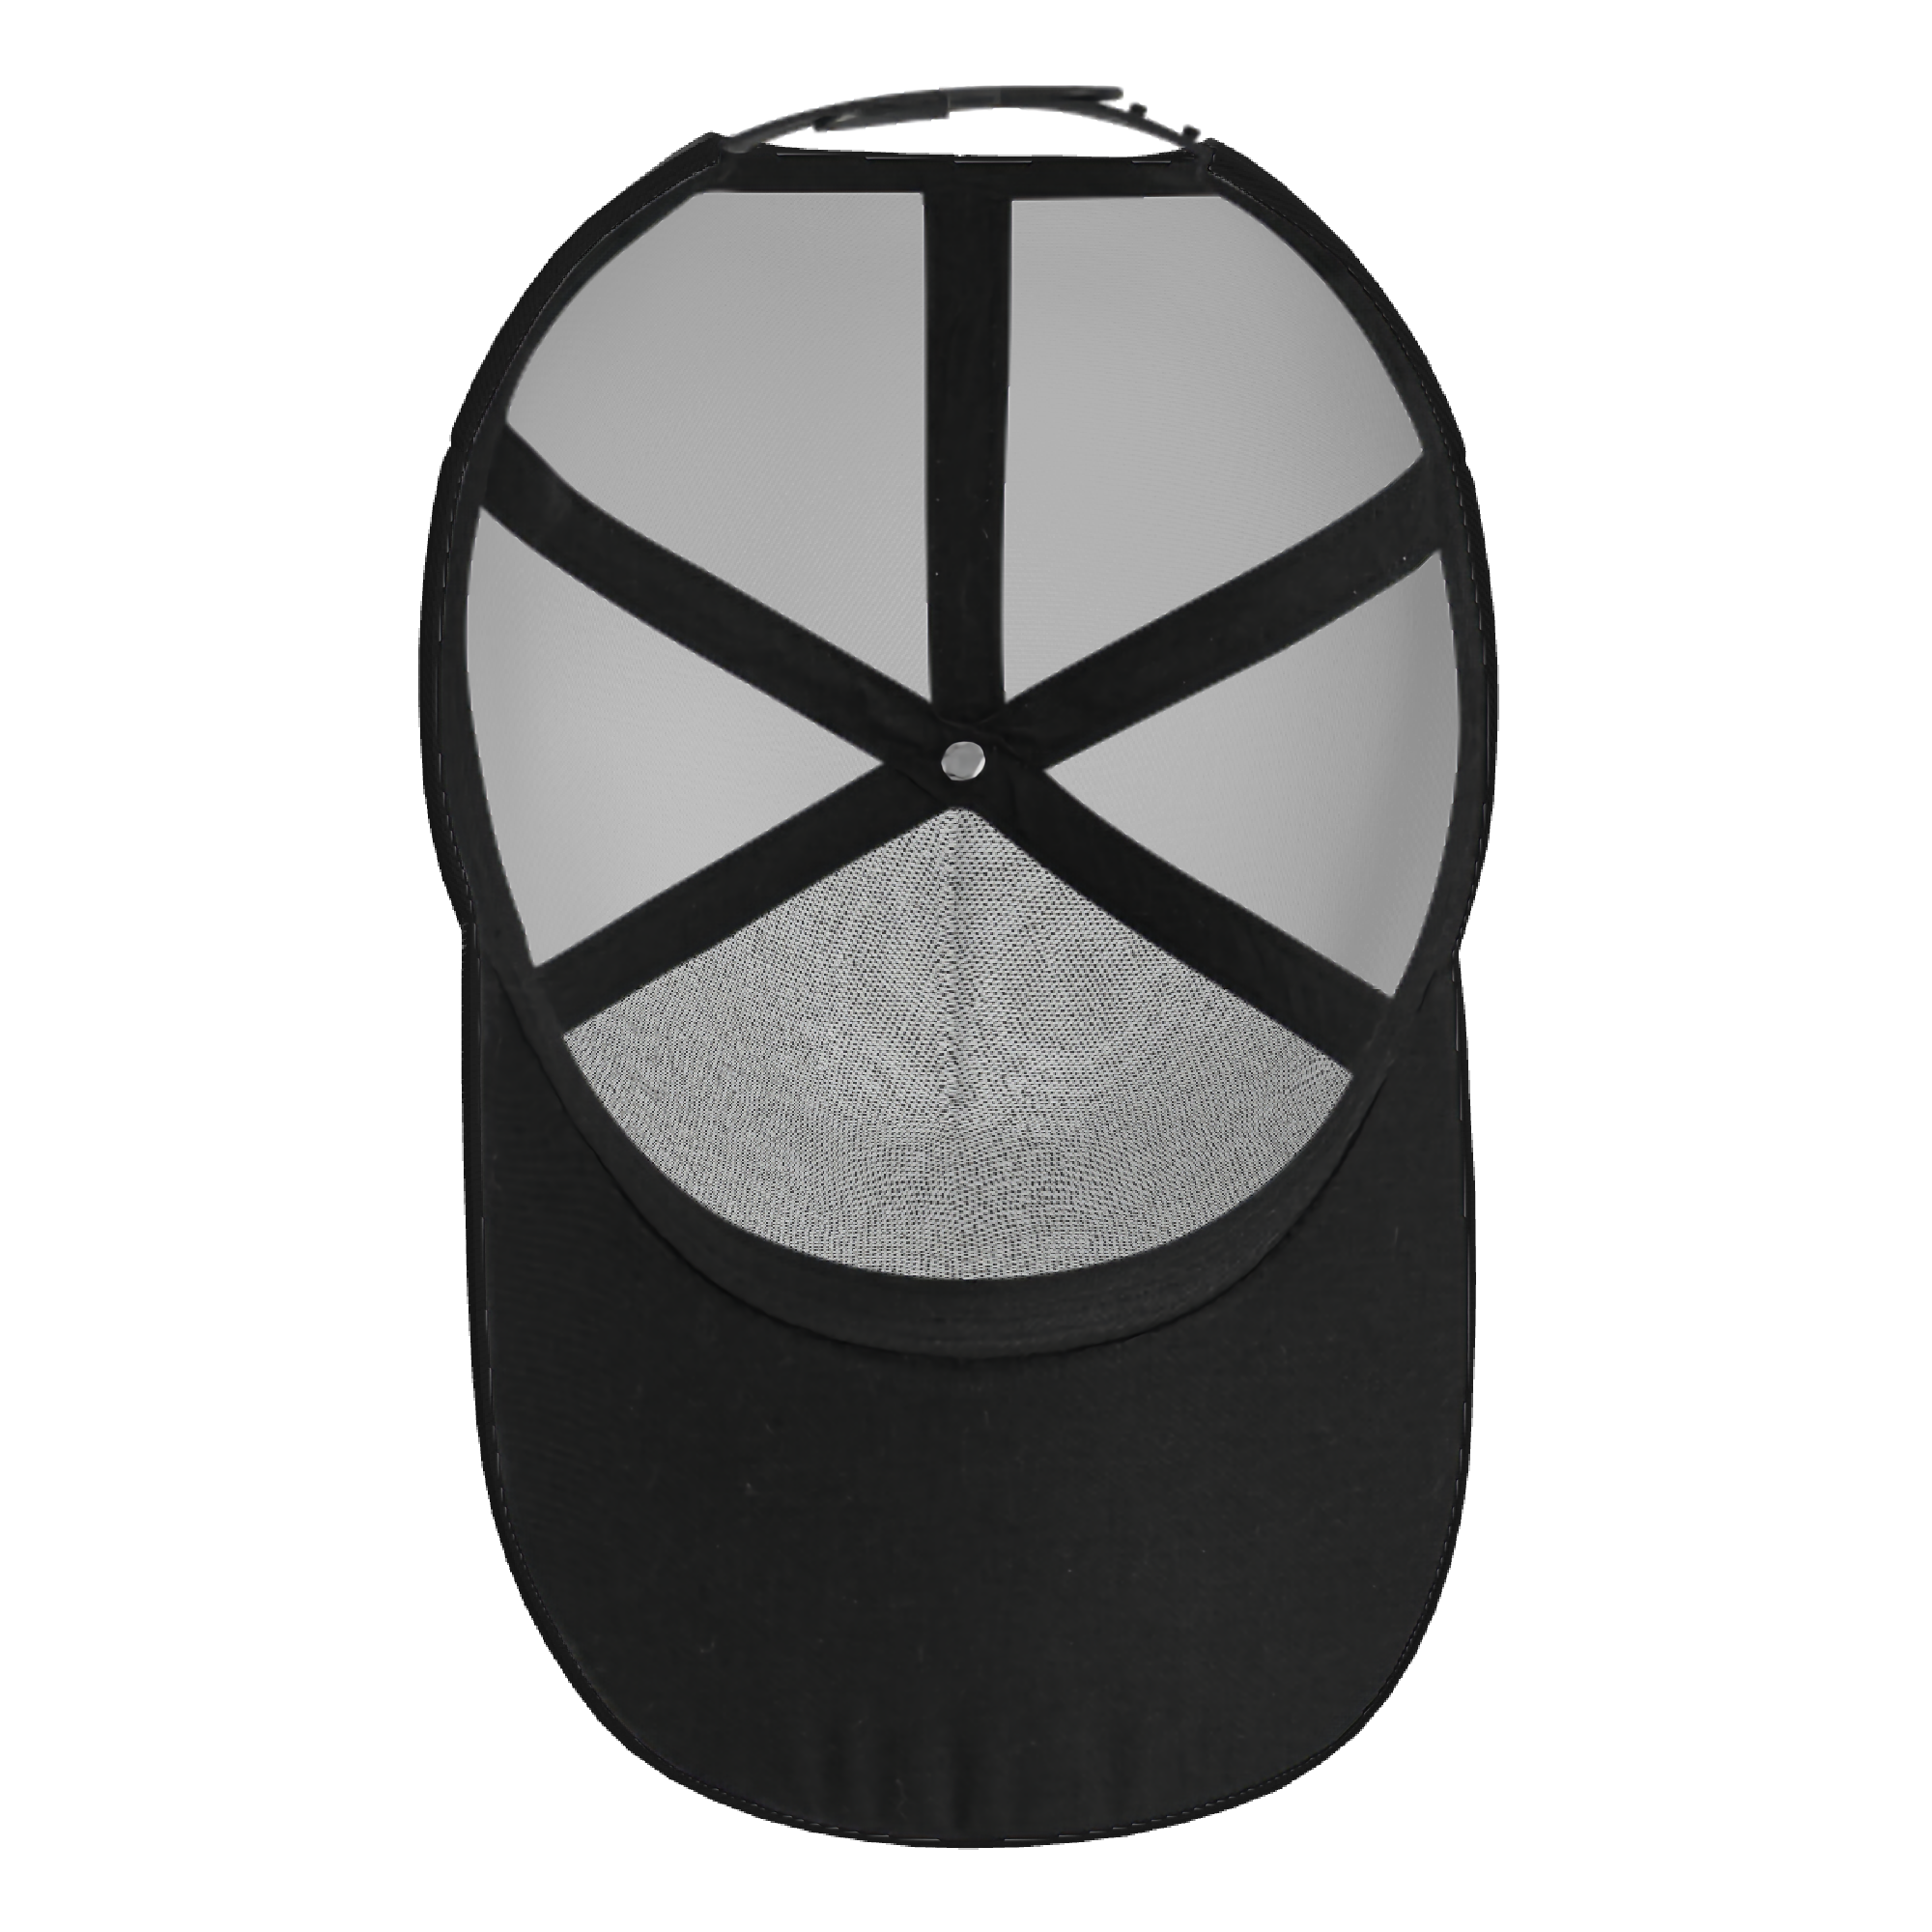 Customizable Curved Brim Baseball Cap | Design Your Own | Shoe Zero